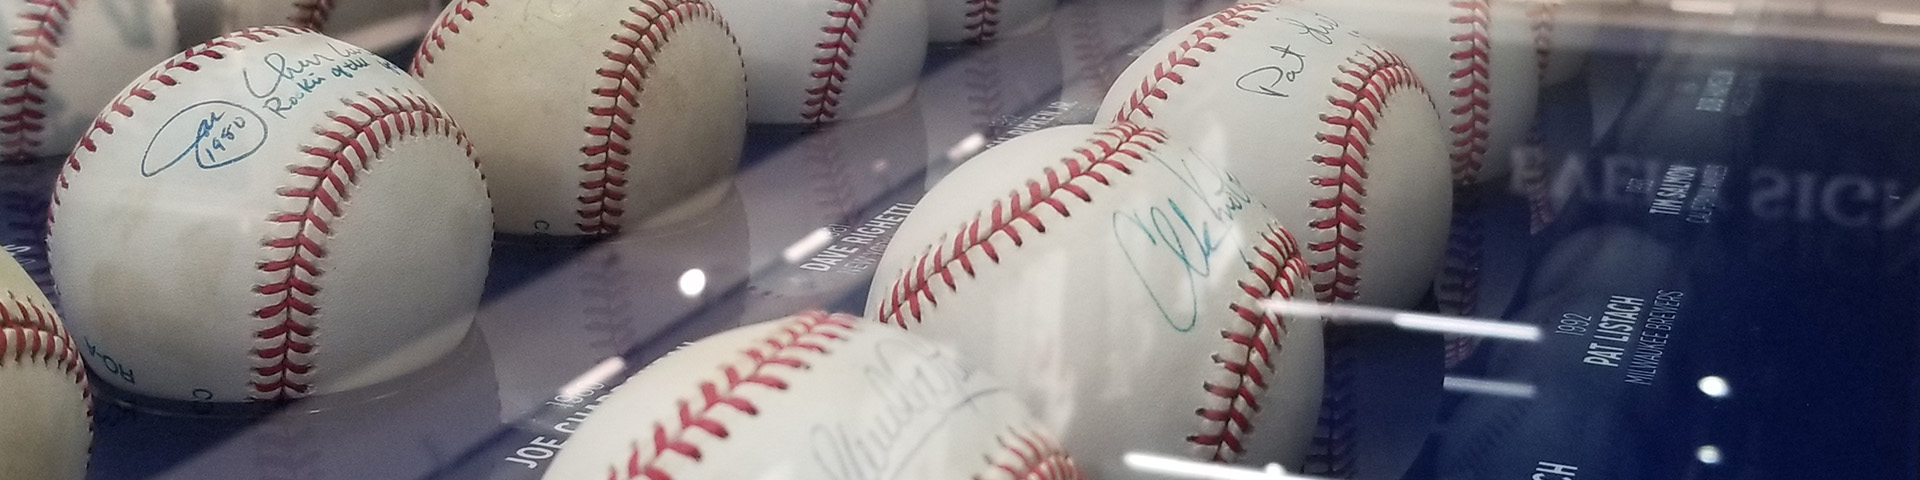 Signed baseballs in an enclosure